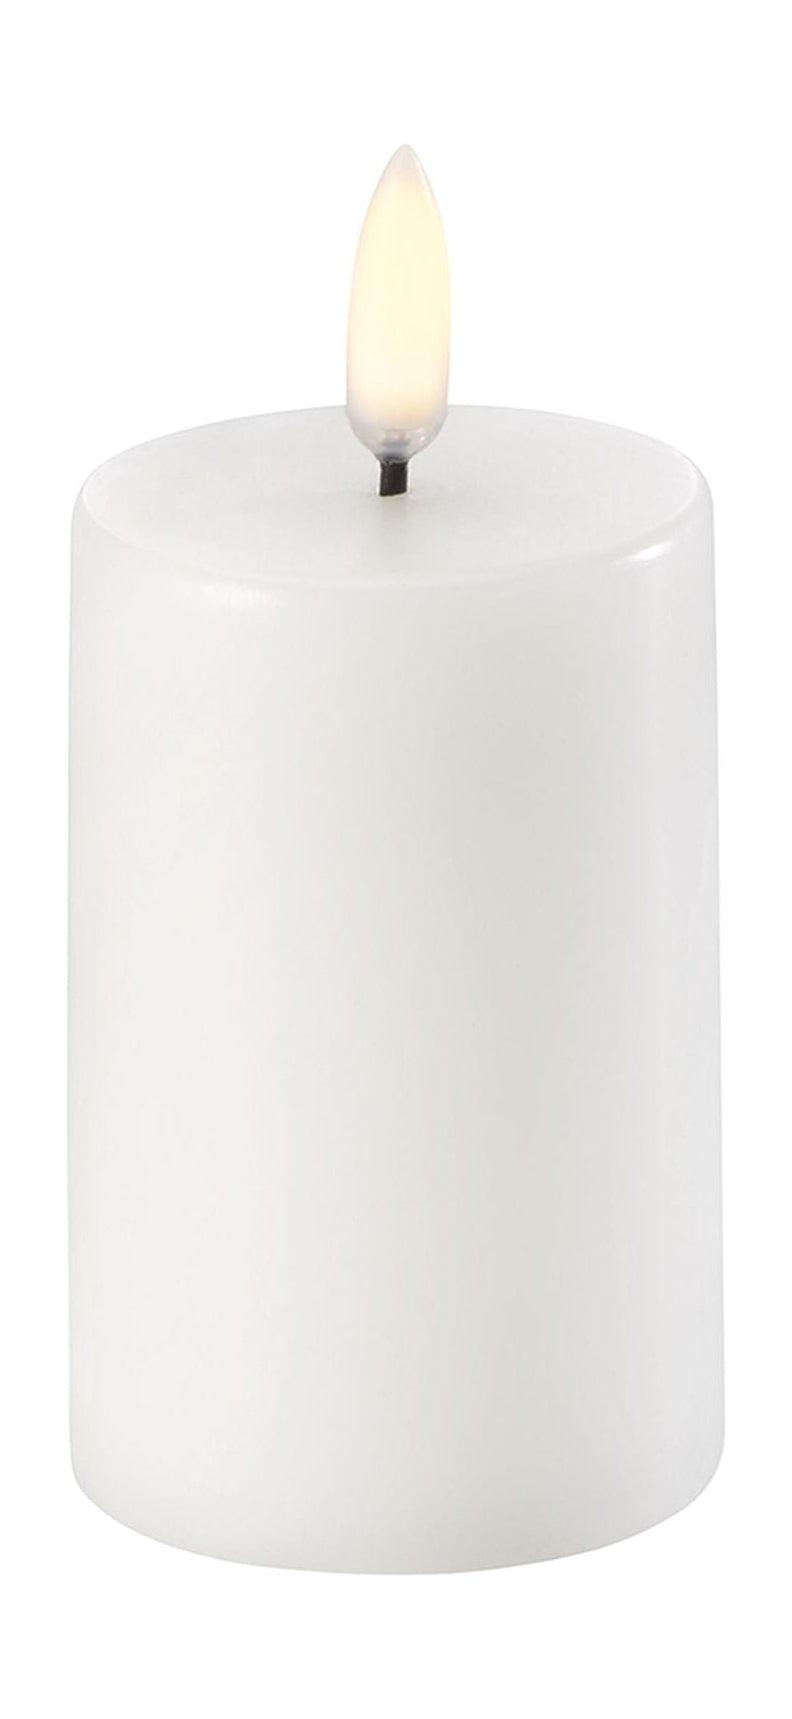 Uyuni Lighting Led Pillar Candle 3 D Flame øx H 5x7,5 Cm, Nordic White